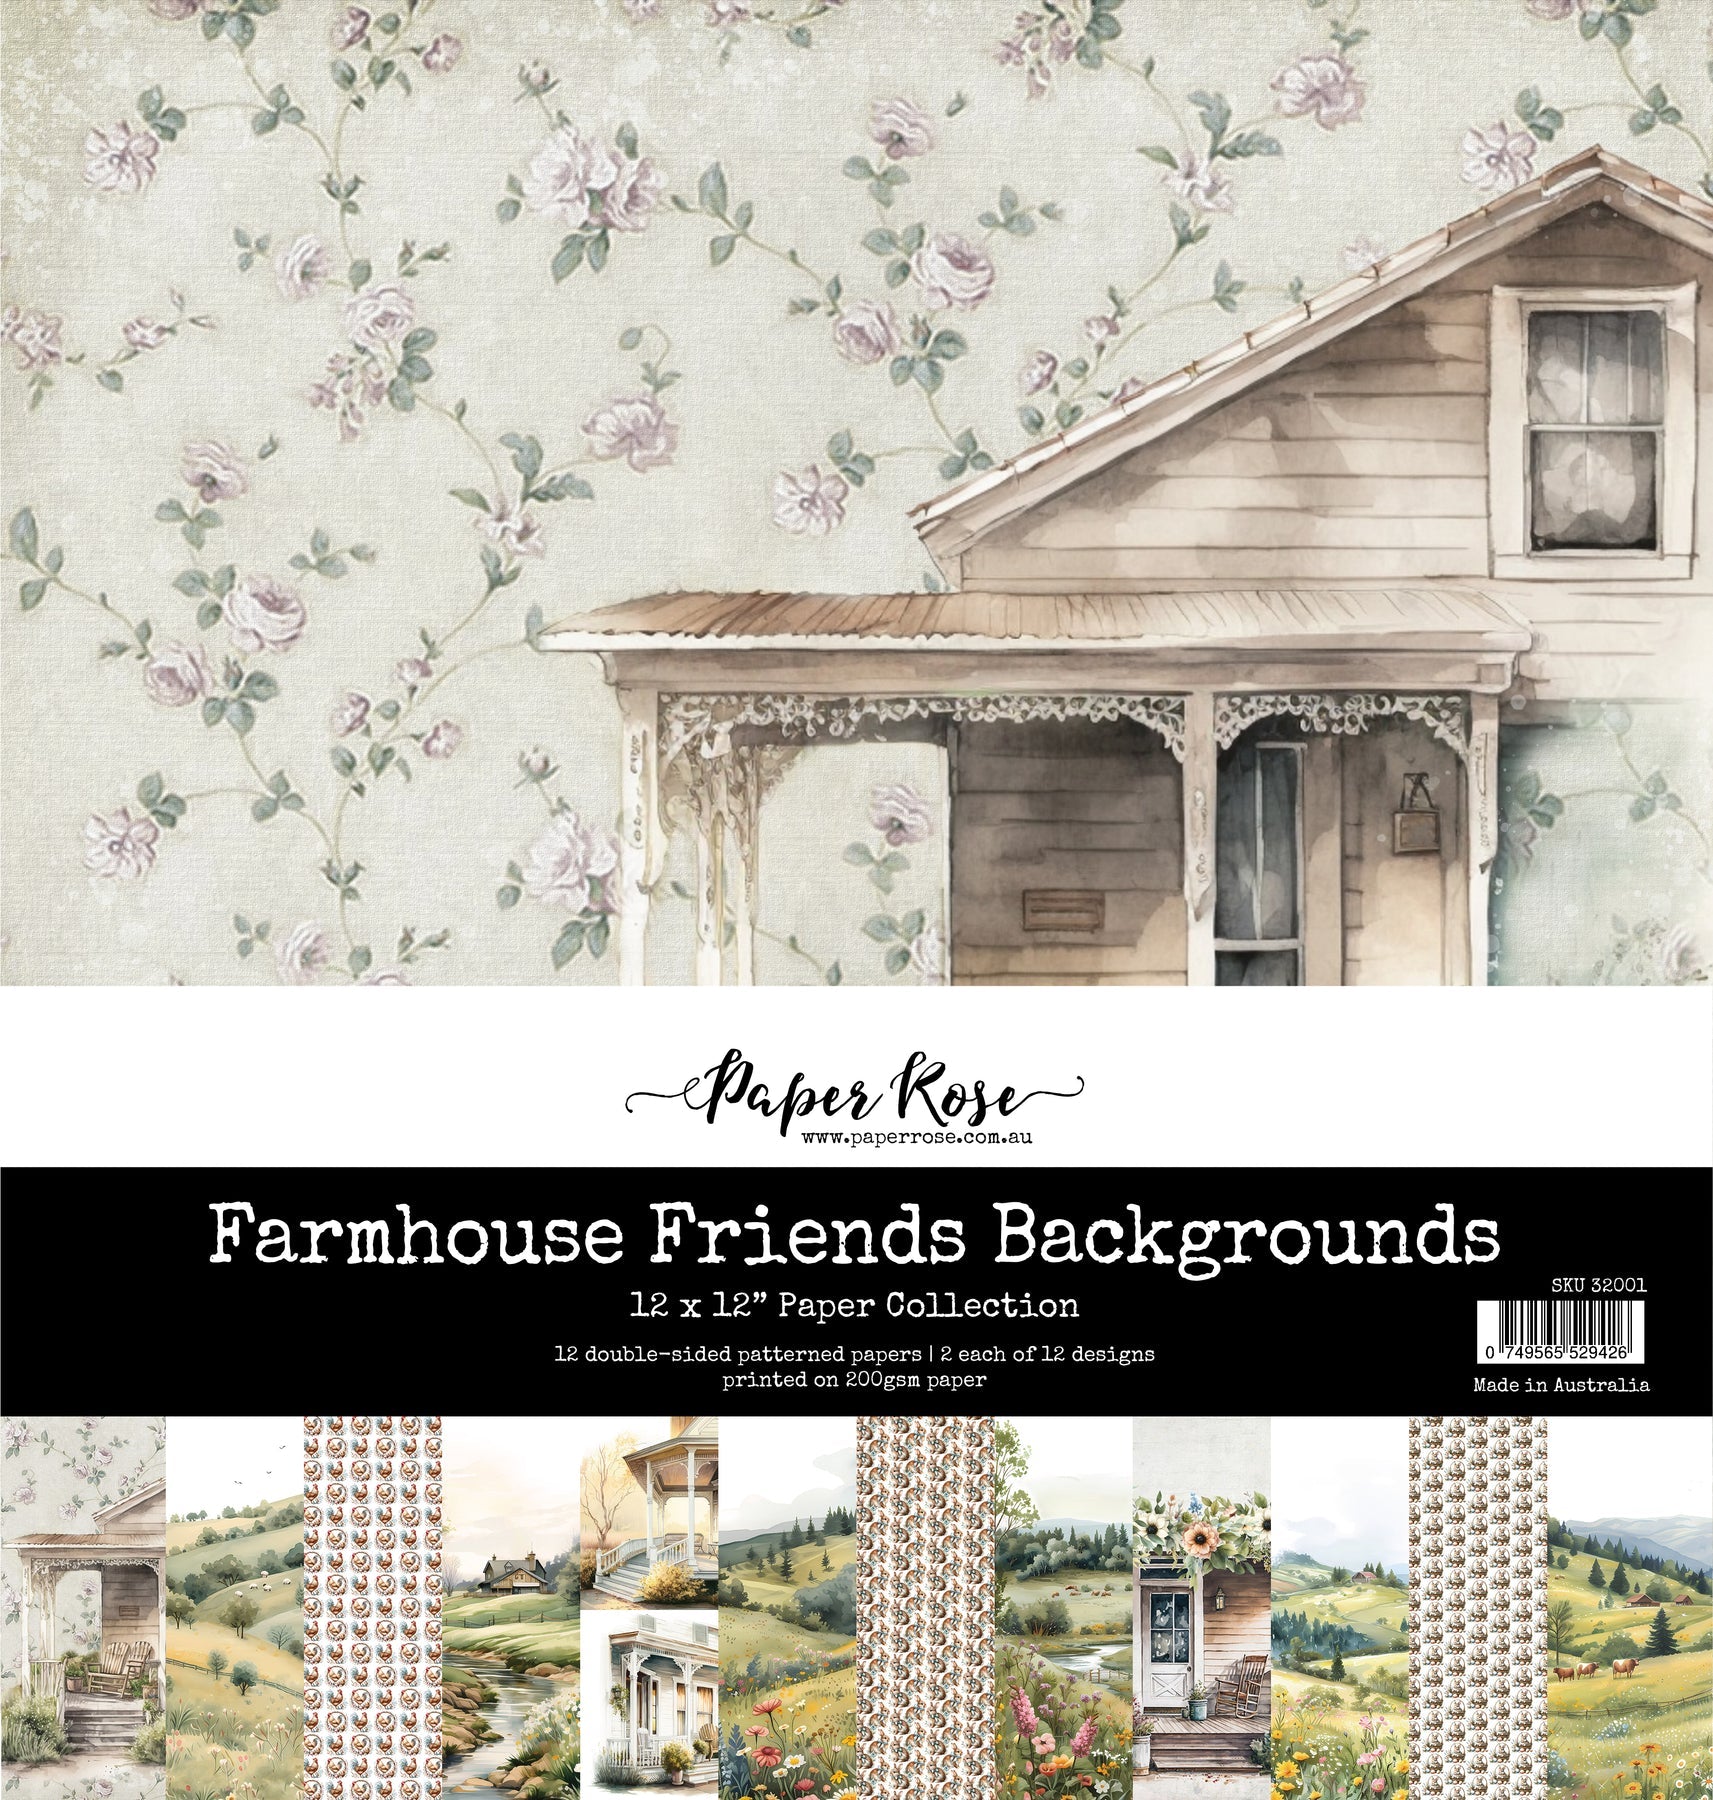 Farmhouse Friends Backgrounds 12x12 Paper Collection 32001